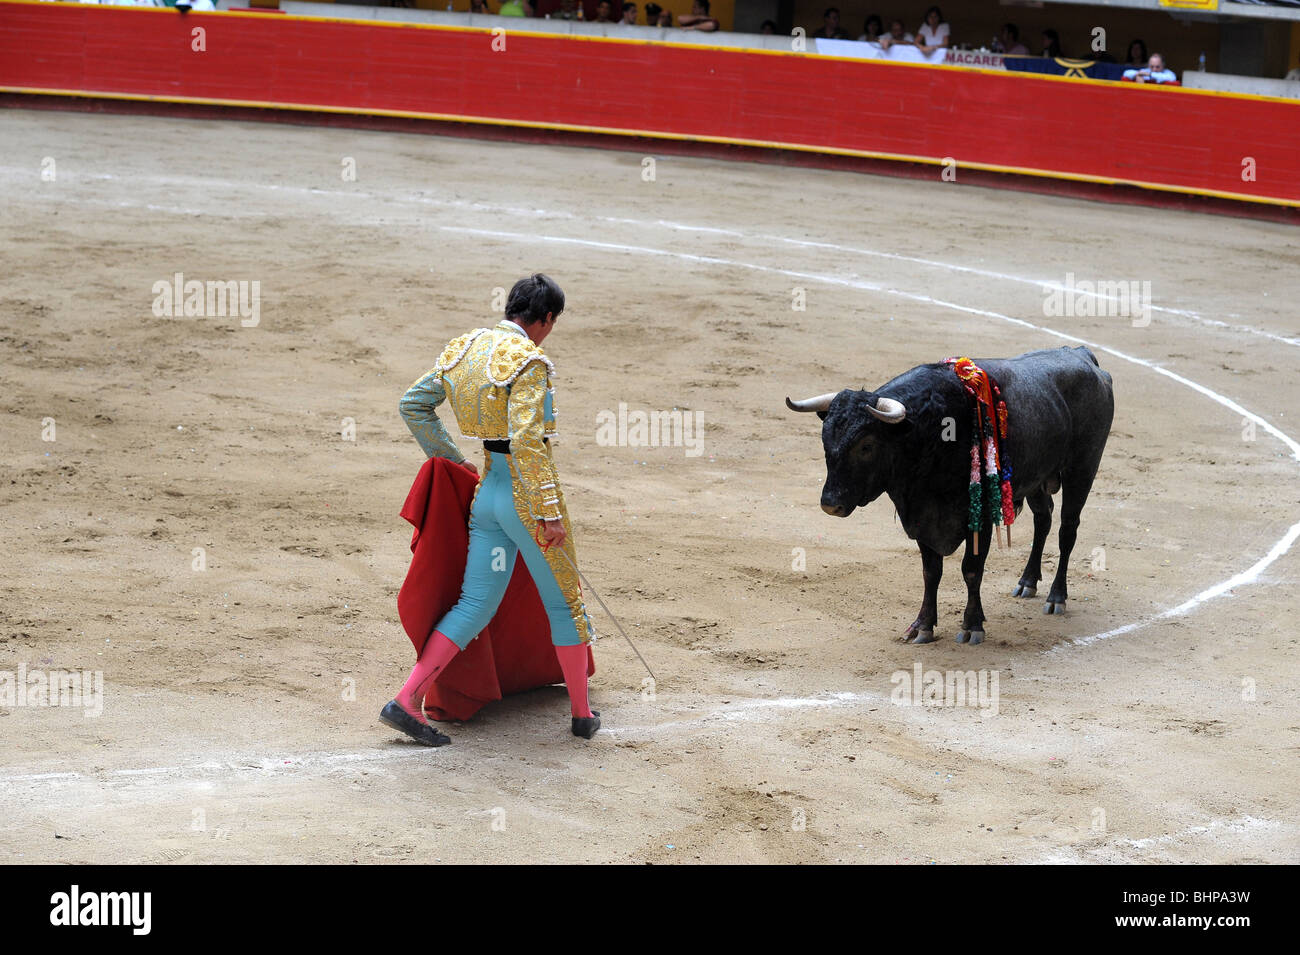 Bullfighter in the ring. brave matador – Stock Editorial Photo